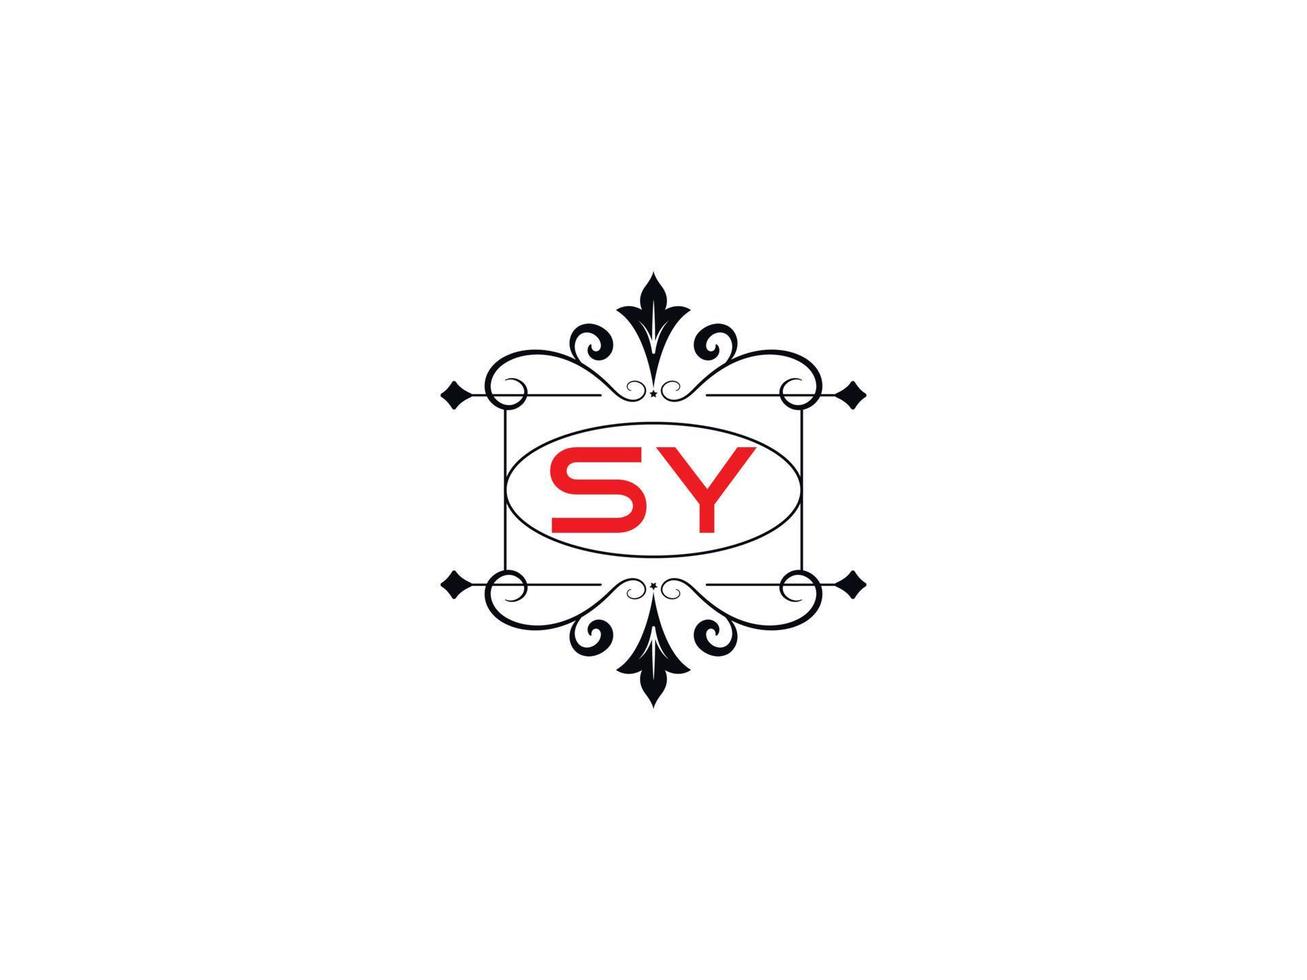 image de logo alphabet sy, vecteur d'icône de logo de lettre de luxe sy créatif